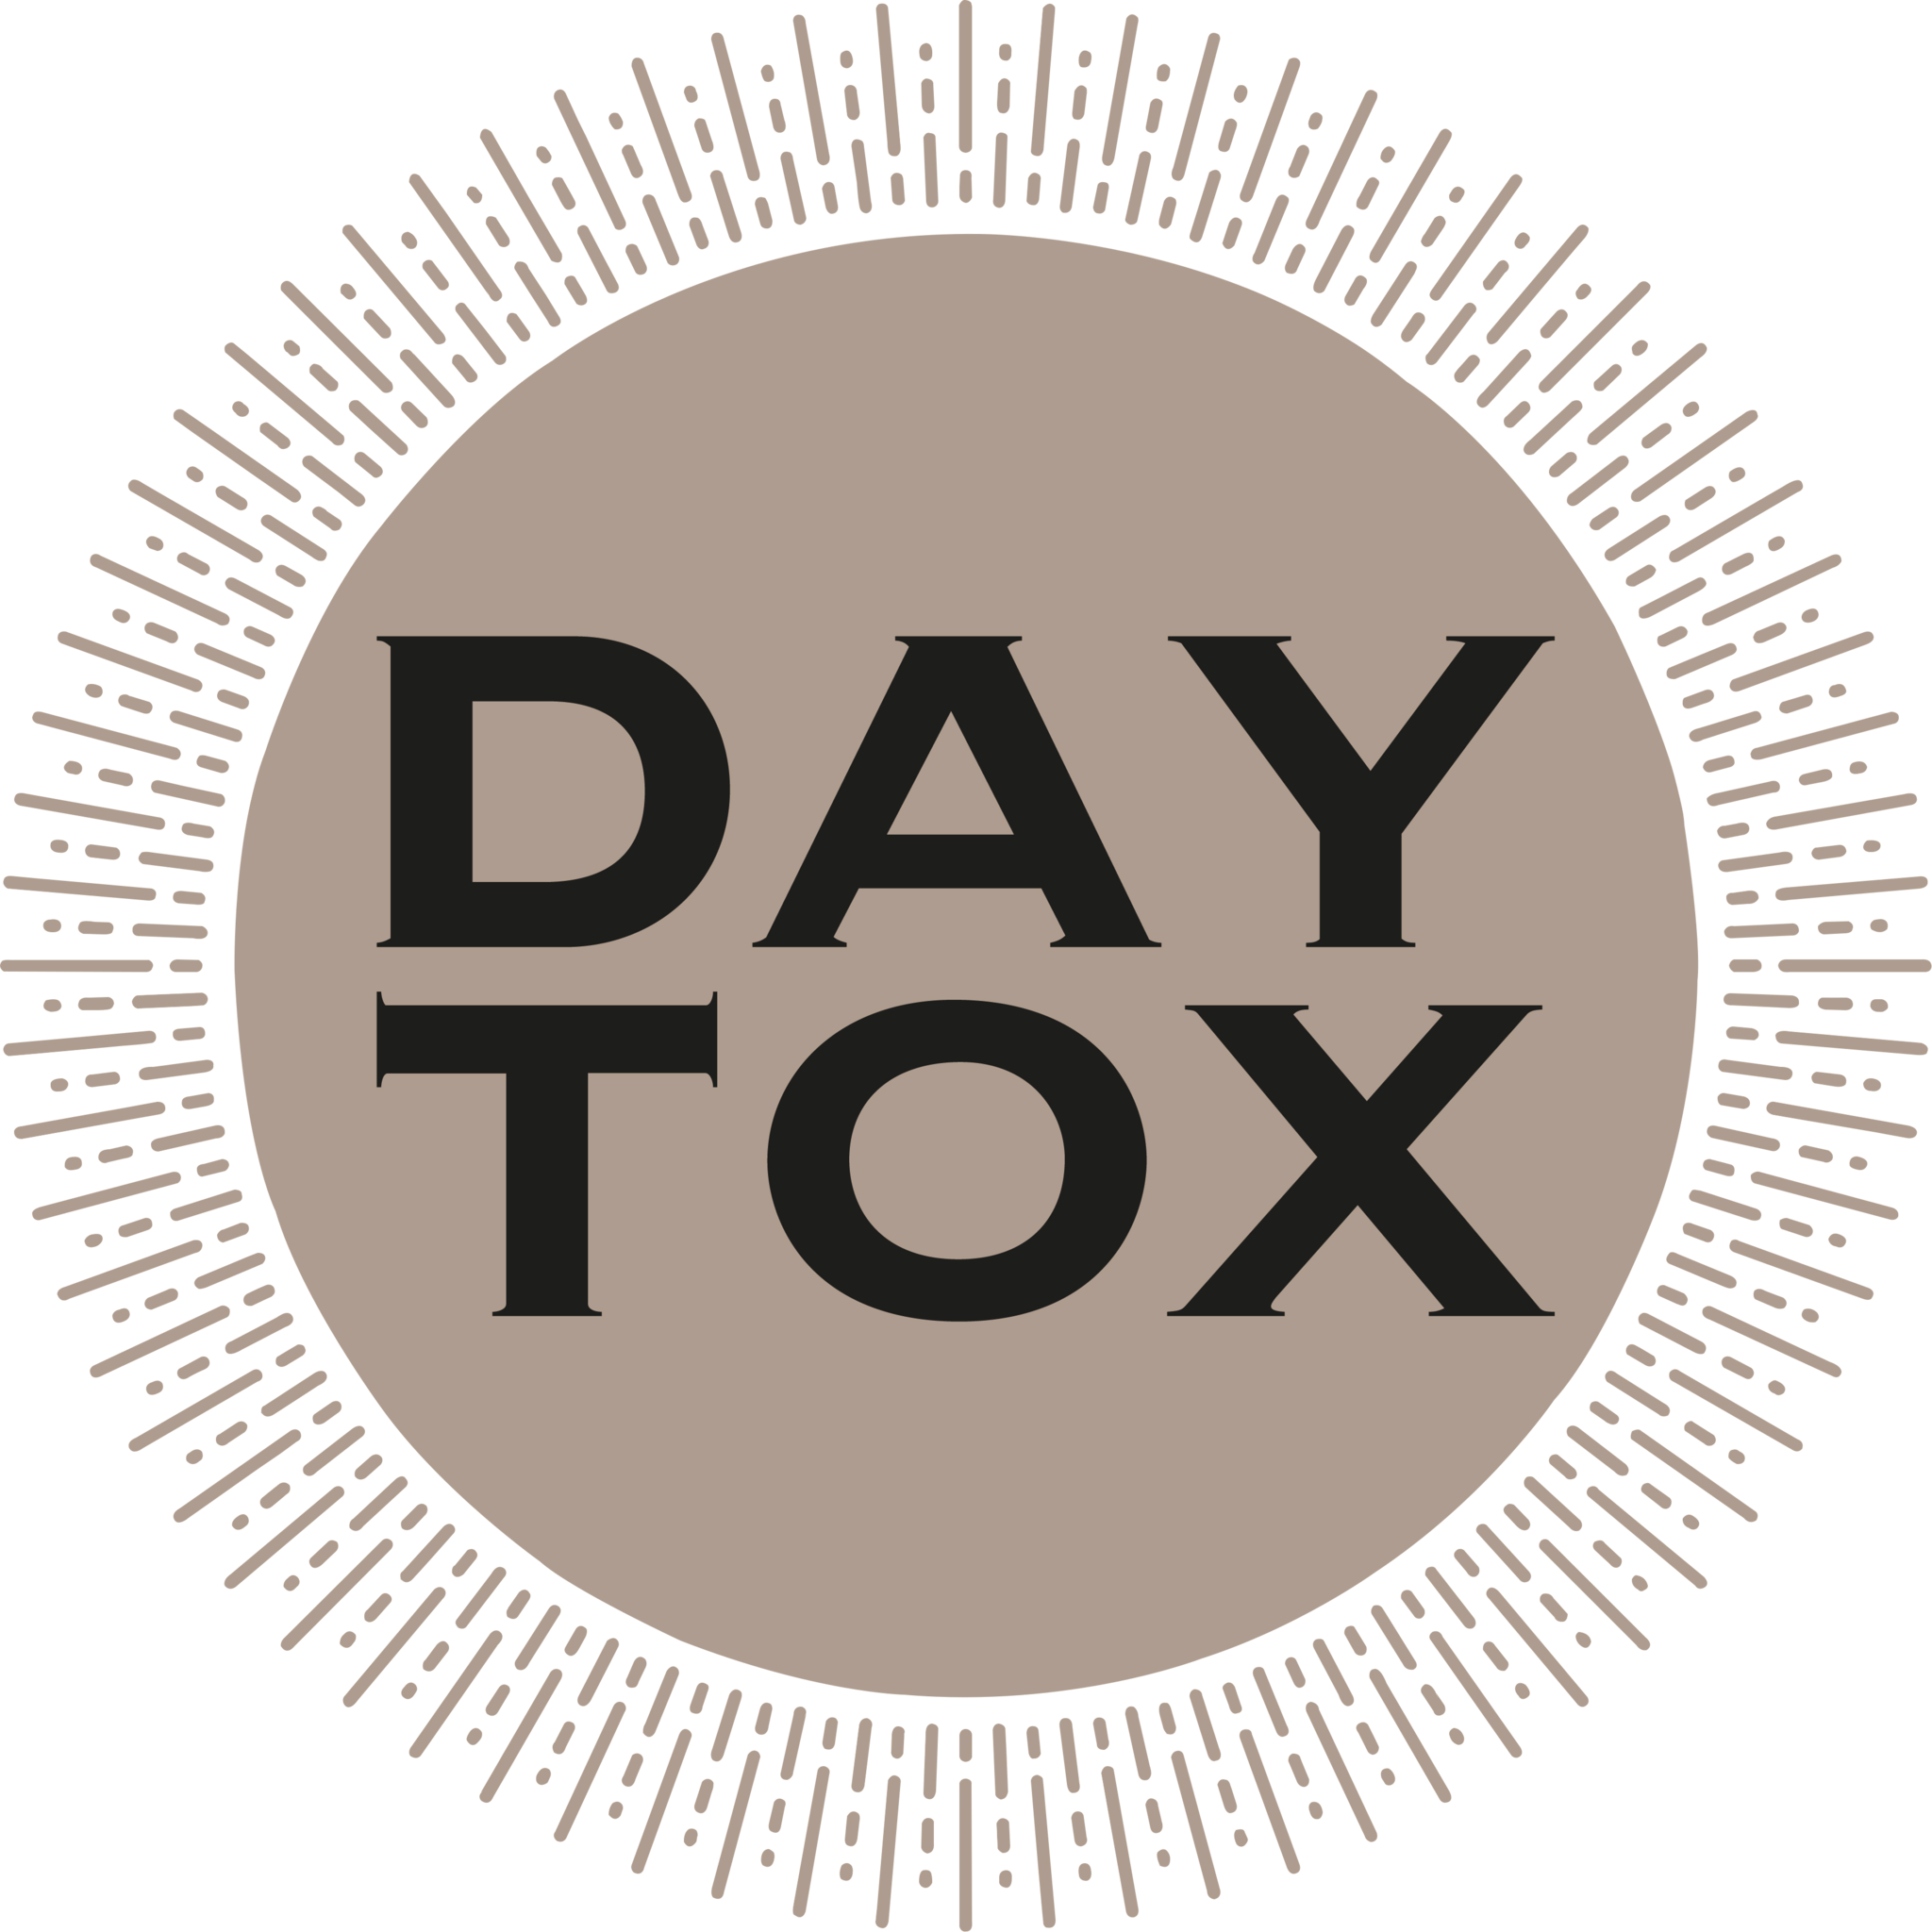 Daytox